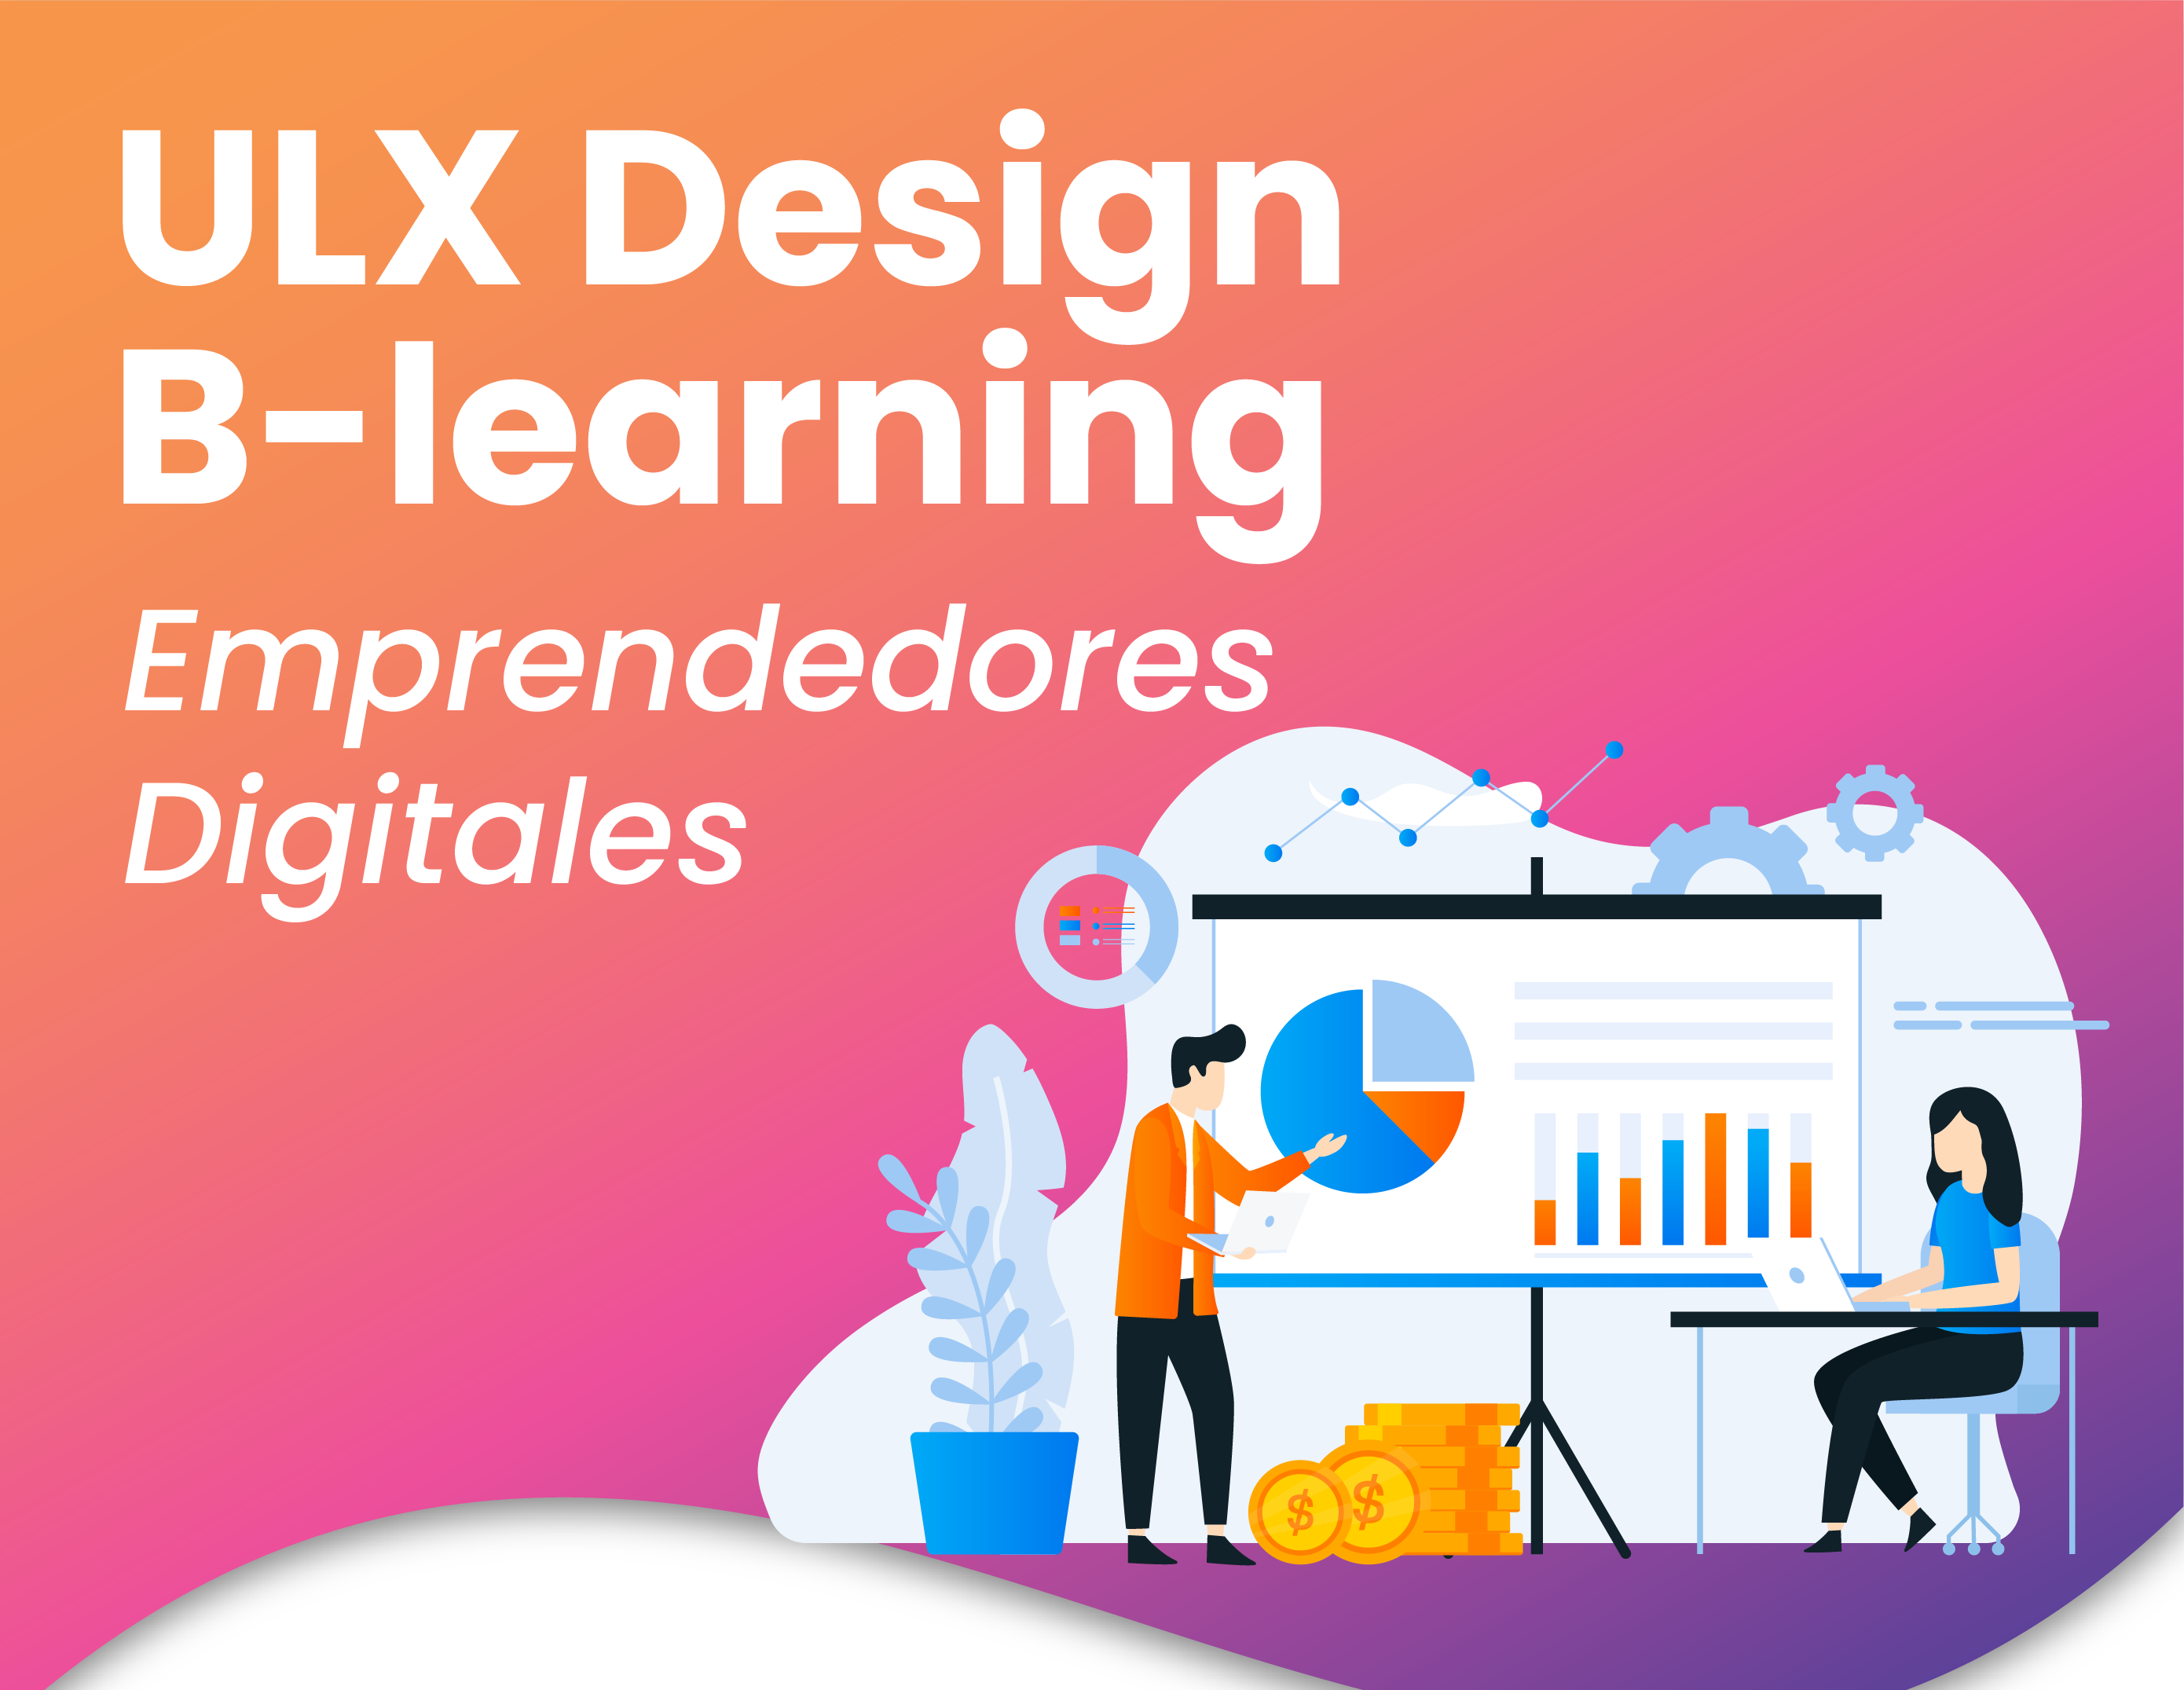 ULX Desing B-learning Emprendedores Digitales